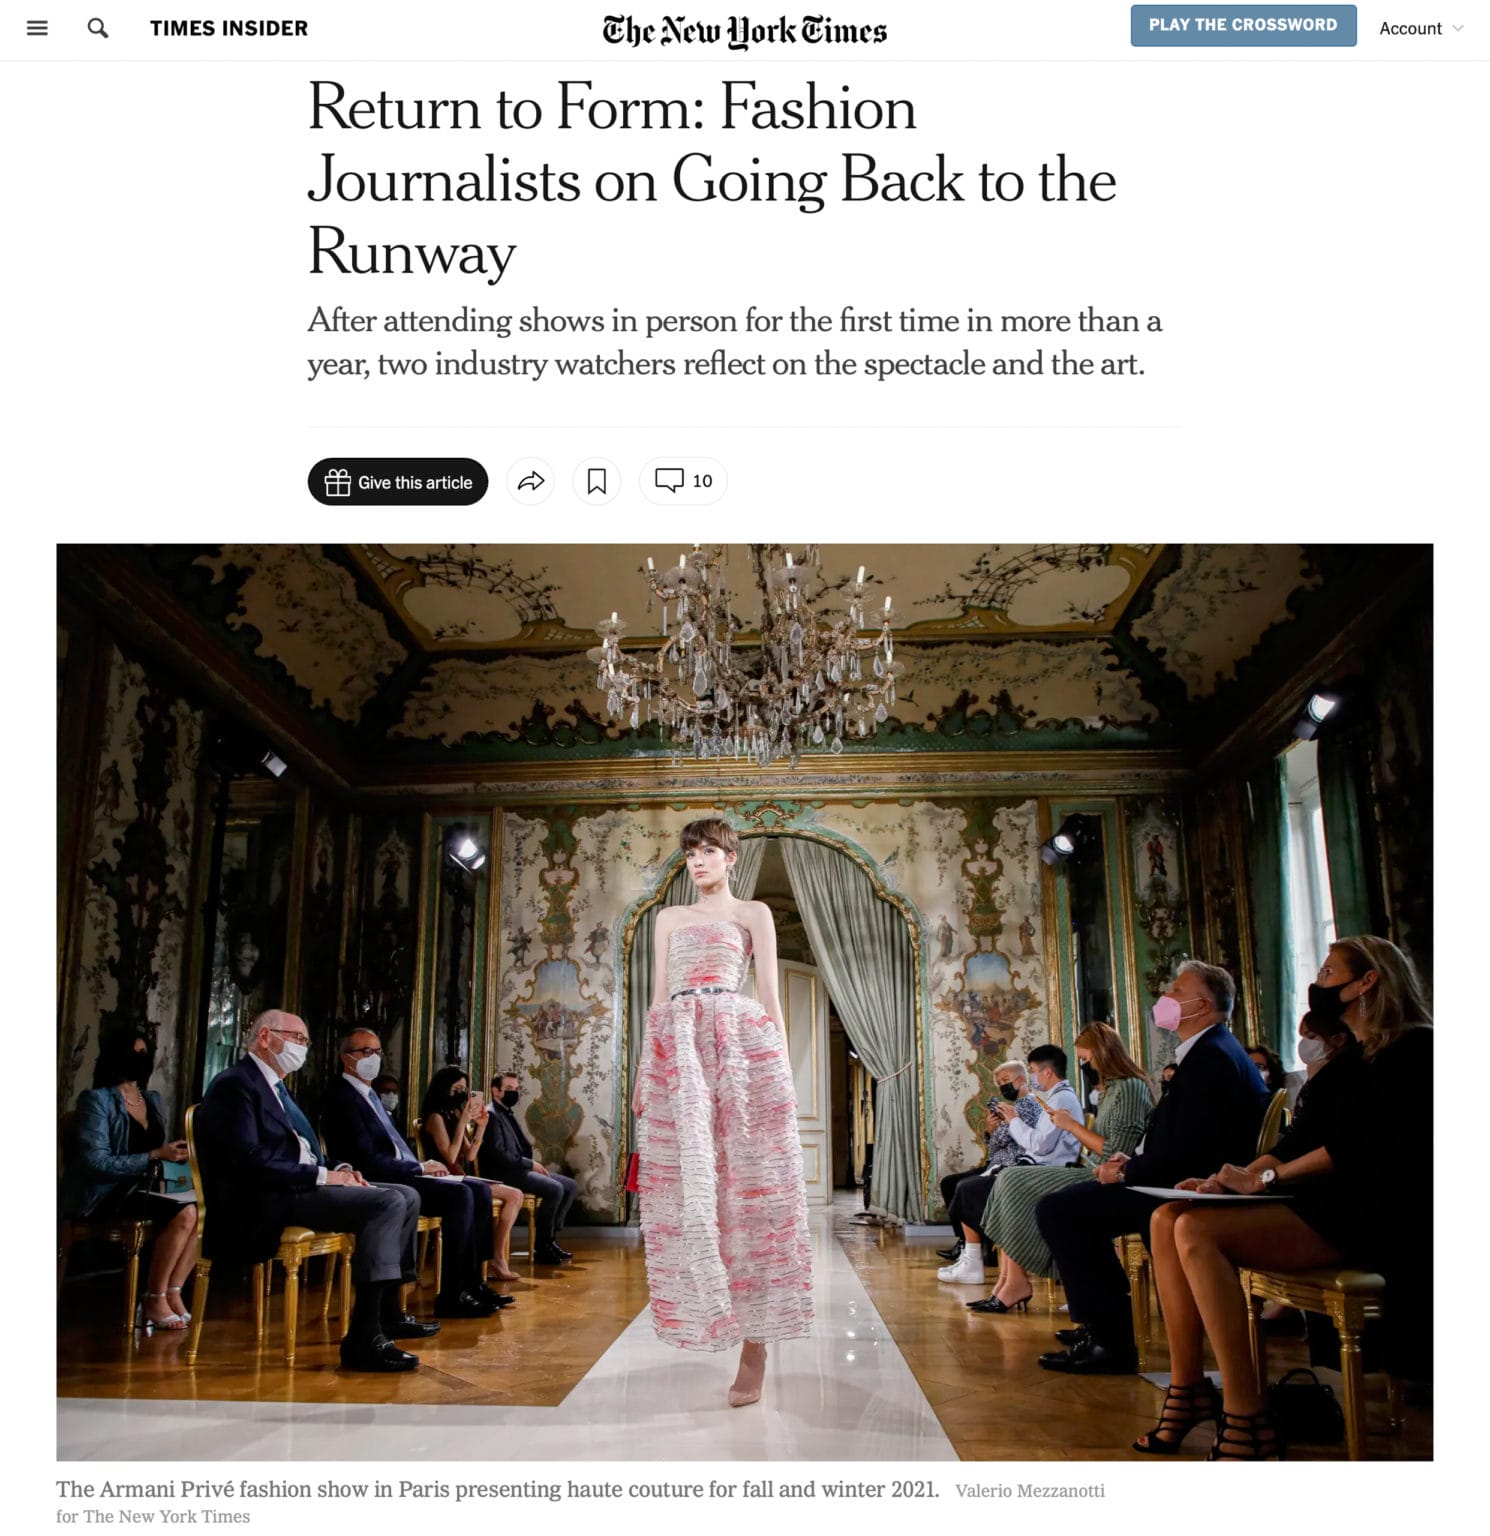 Armani Prive Fashion Show, Photo by Valerio Mezzanotti for The New York Times